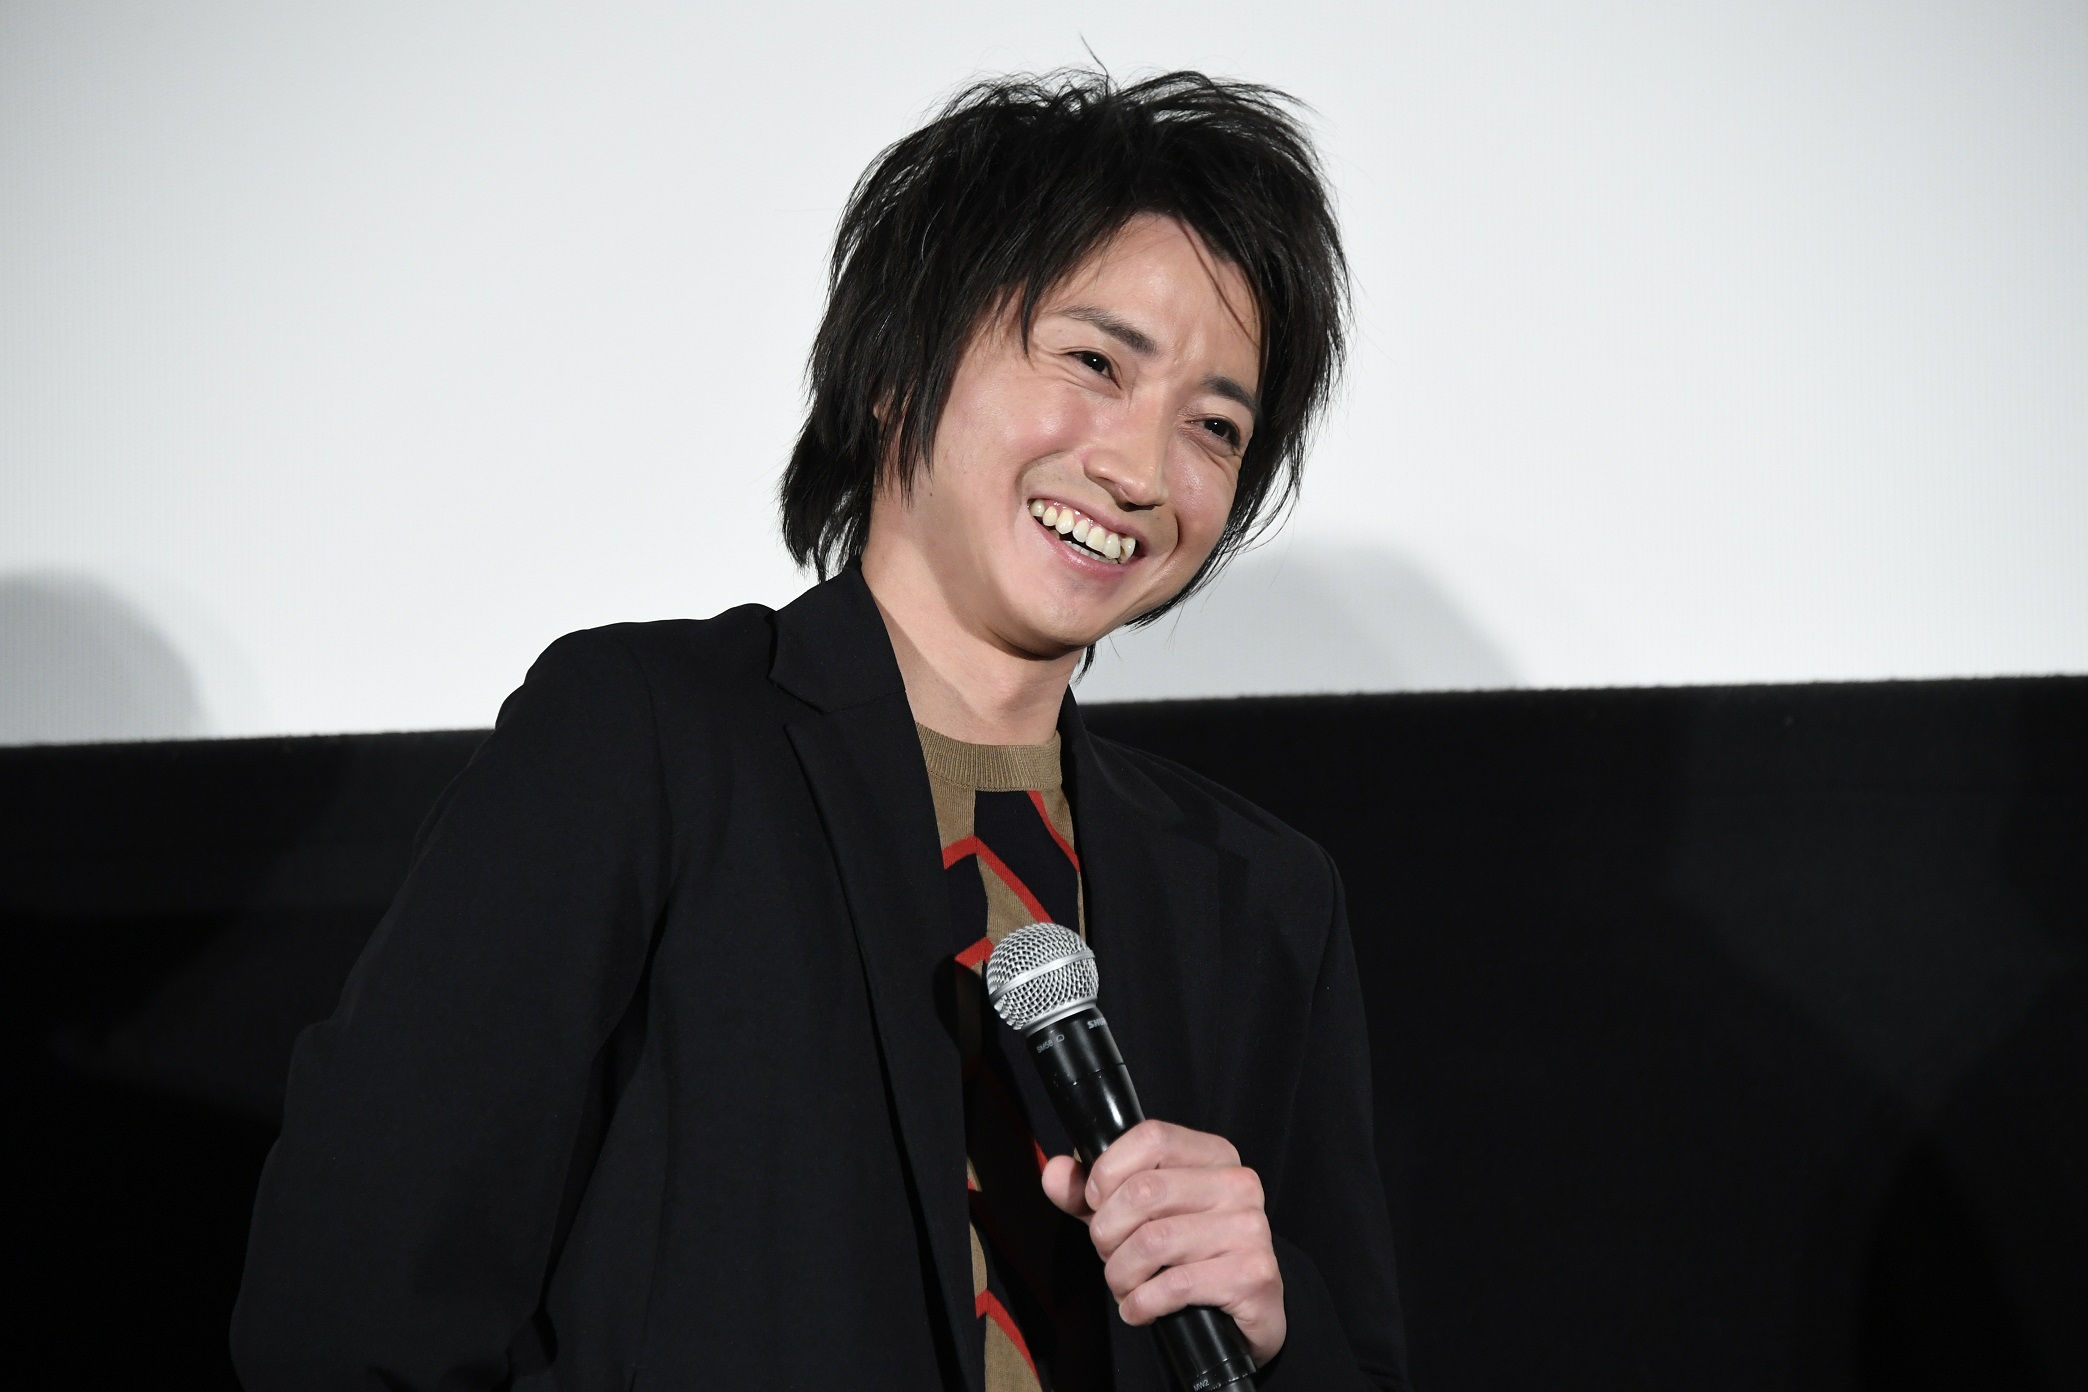 Tatsuya Fujiwara wearing a black coat while holding a mic